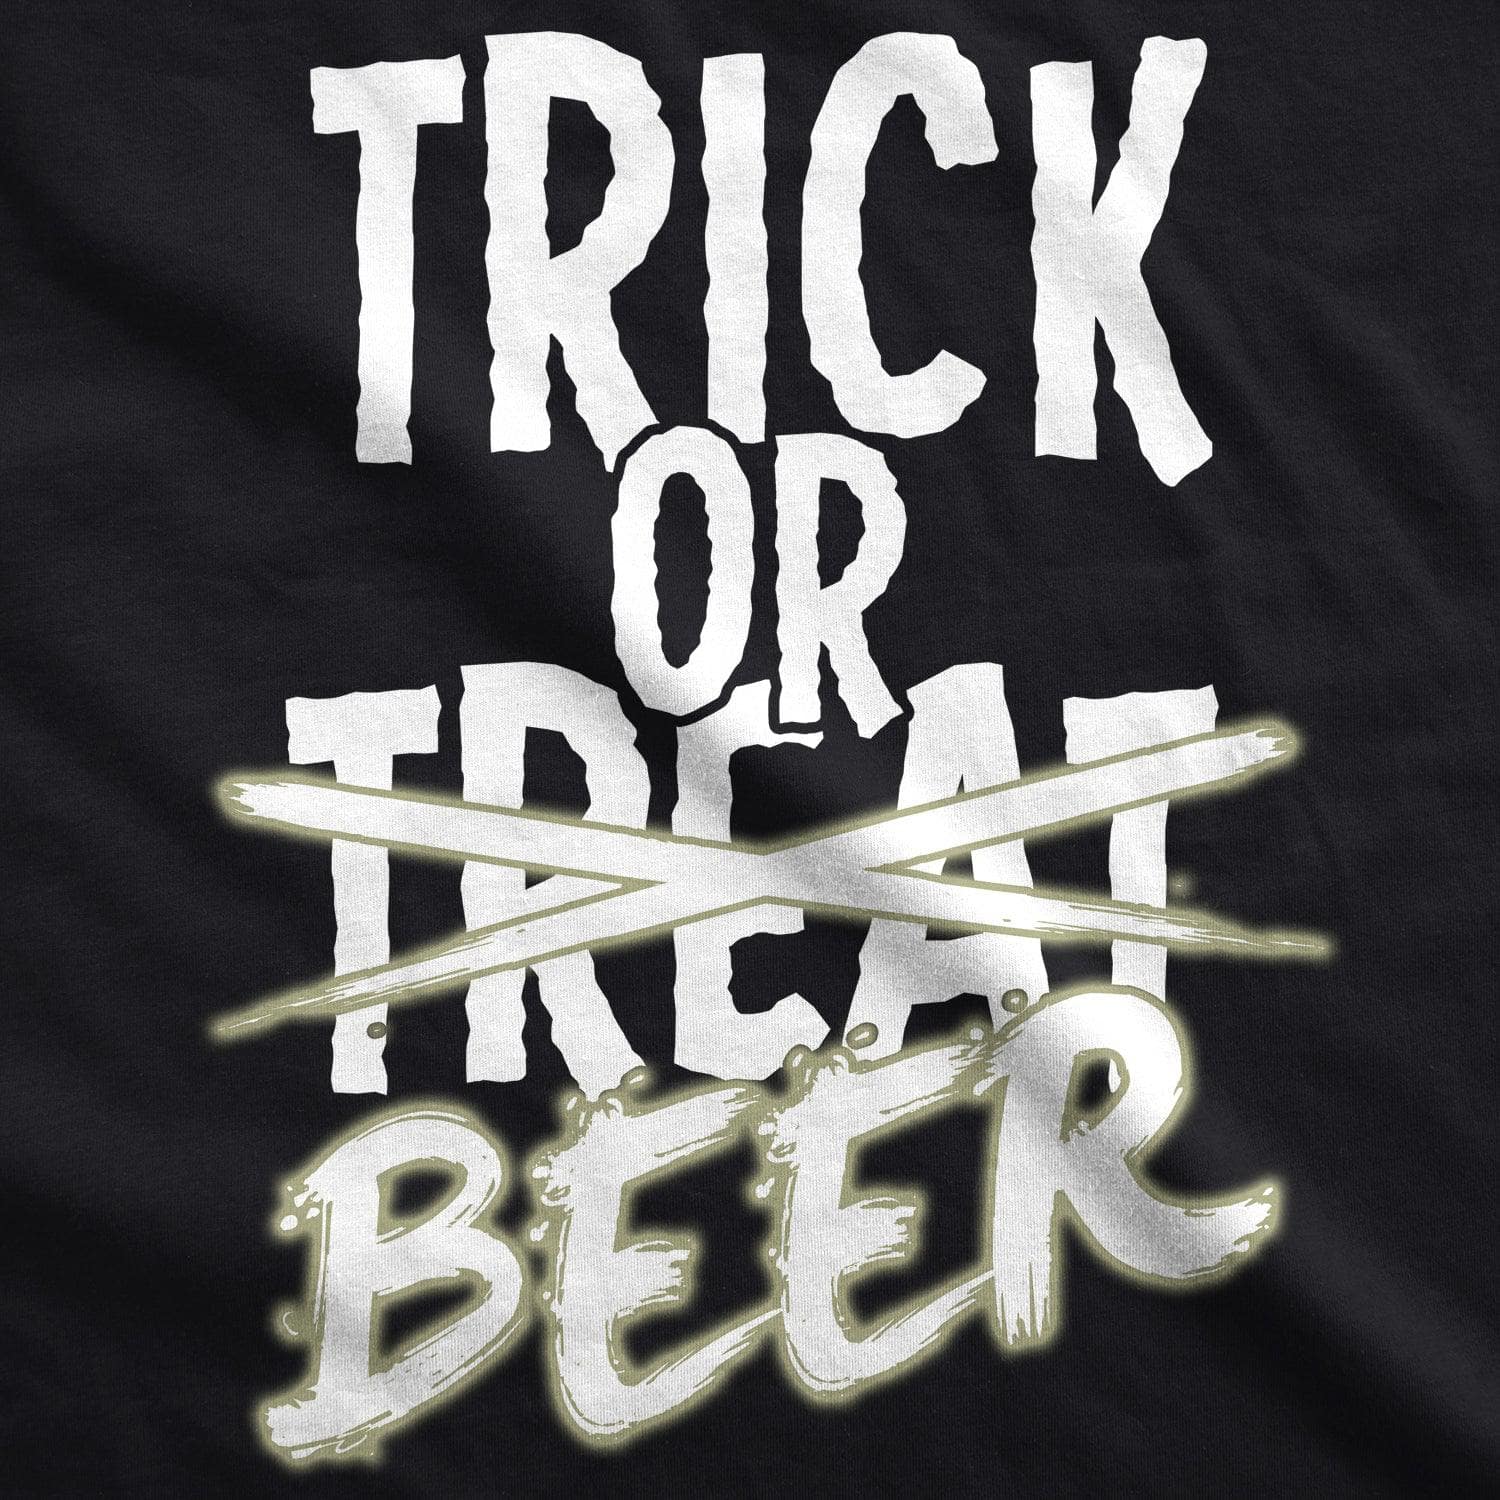 Trick Or Beer Glow Men's Tshirt  -  Crazy Dog T-Shirts